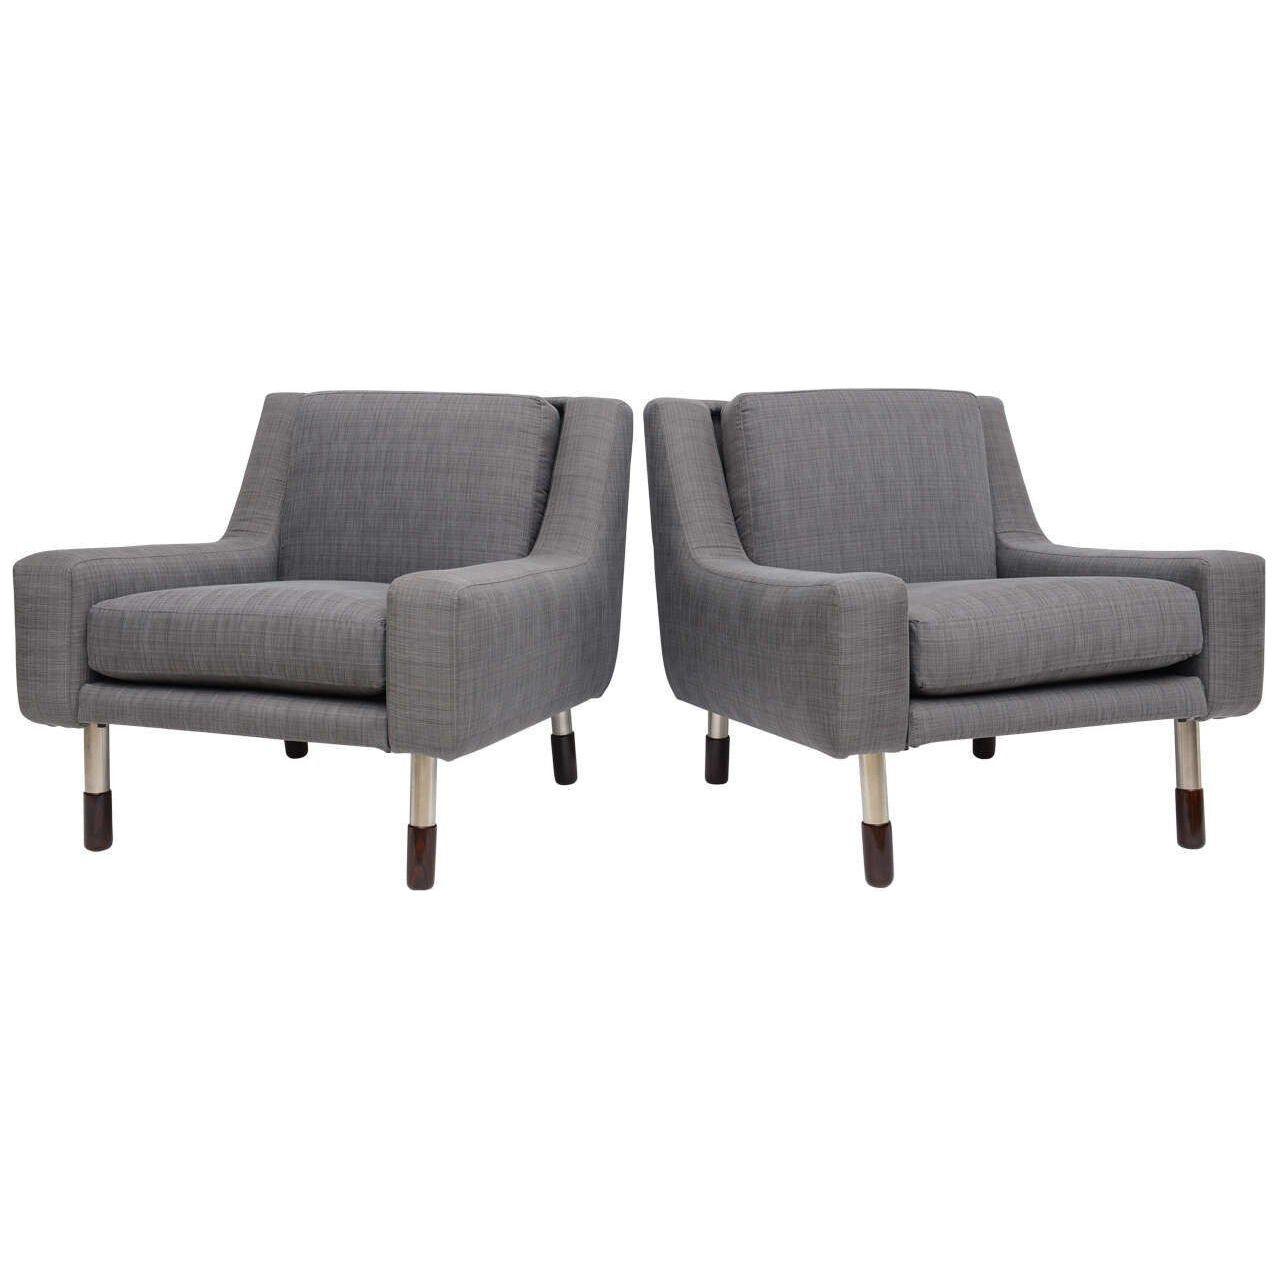 Pair of Modern Nickel Upholstered Italian Chairs, Gianfranco Frattini